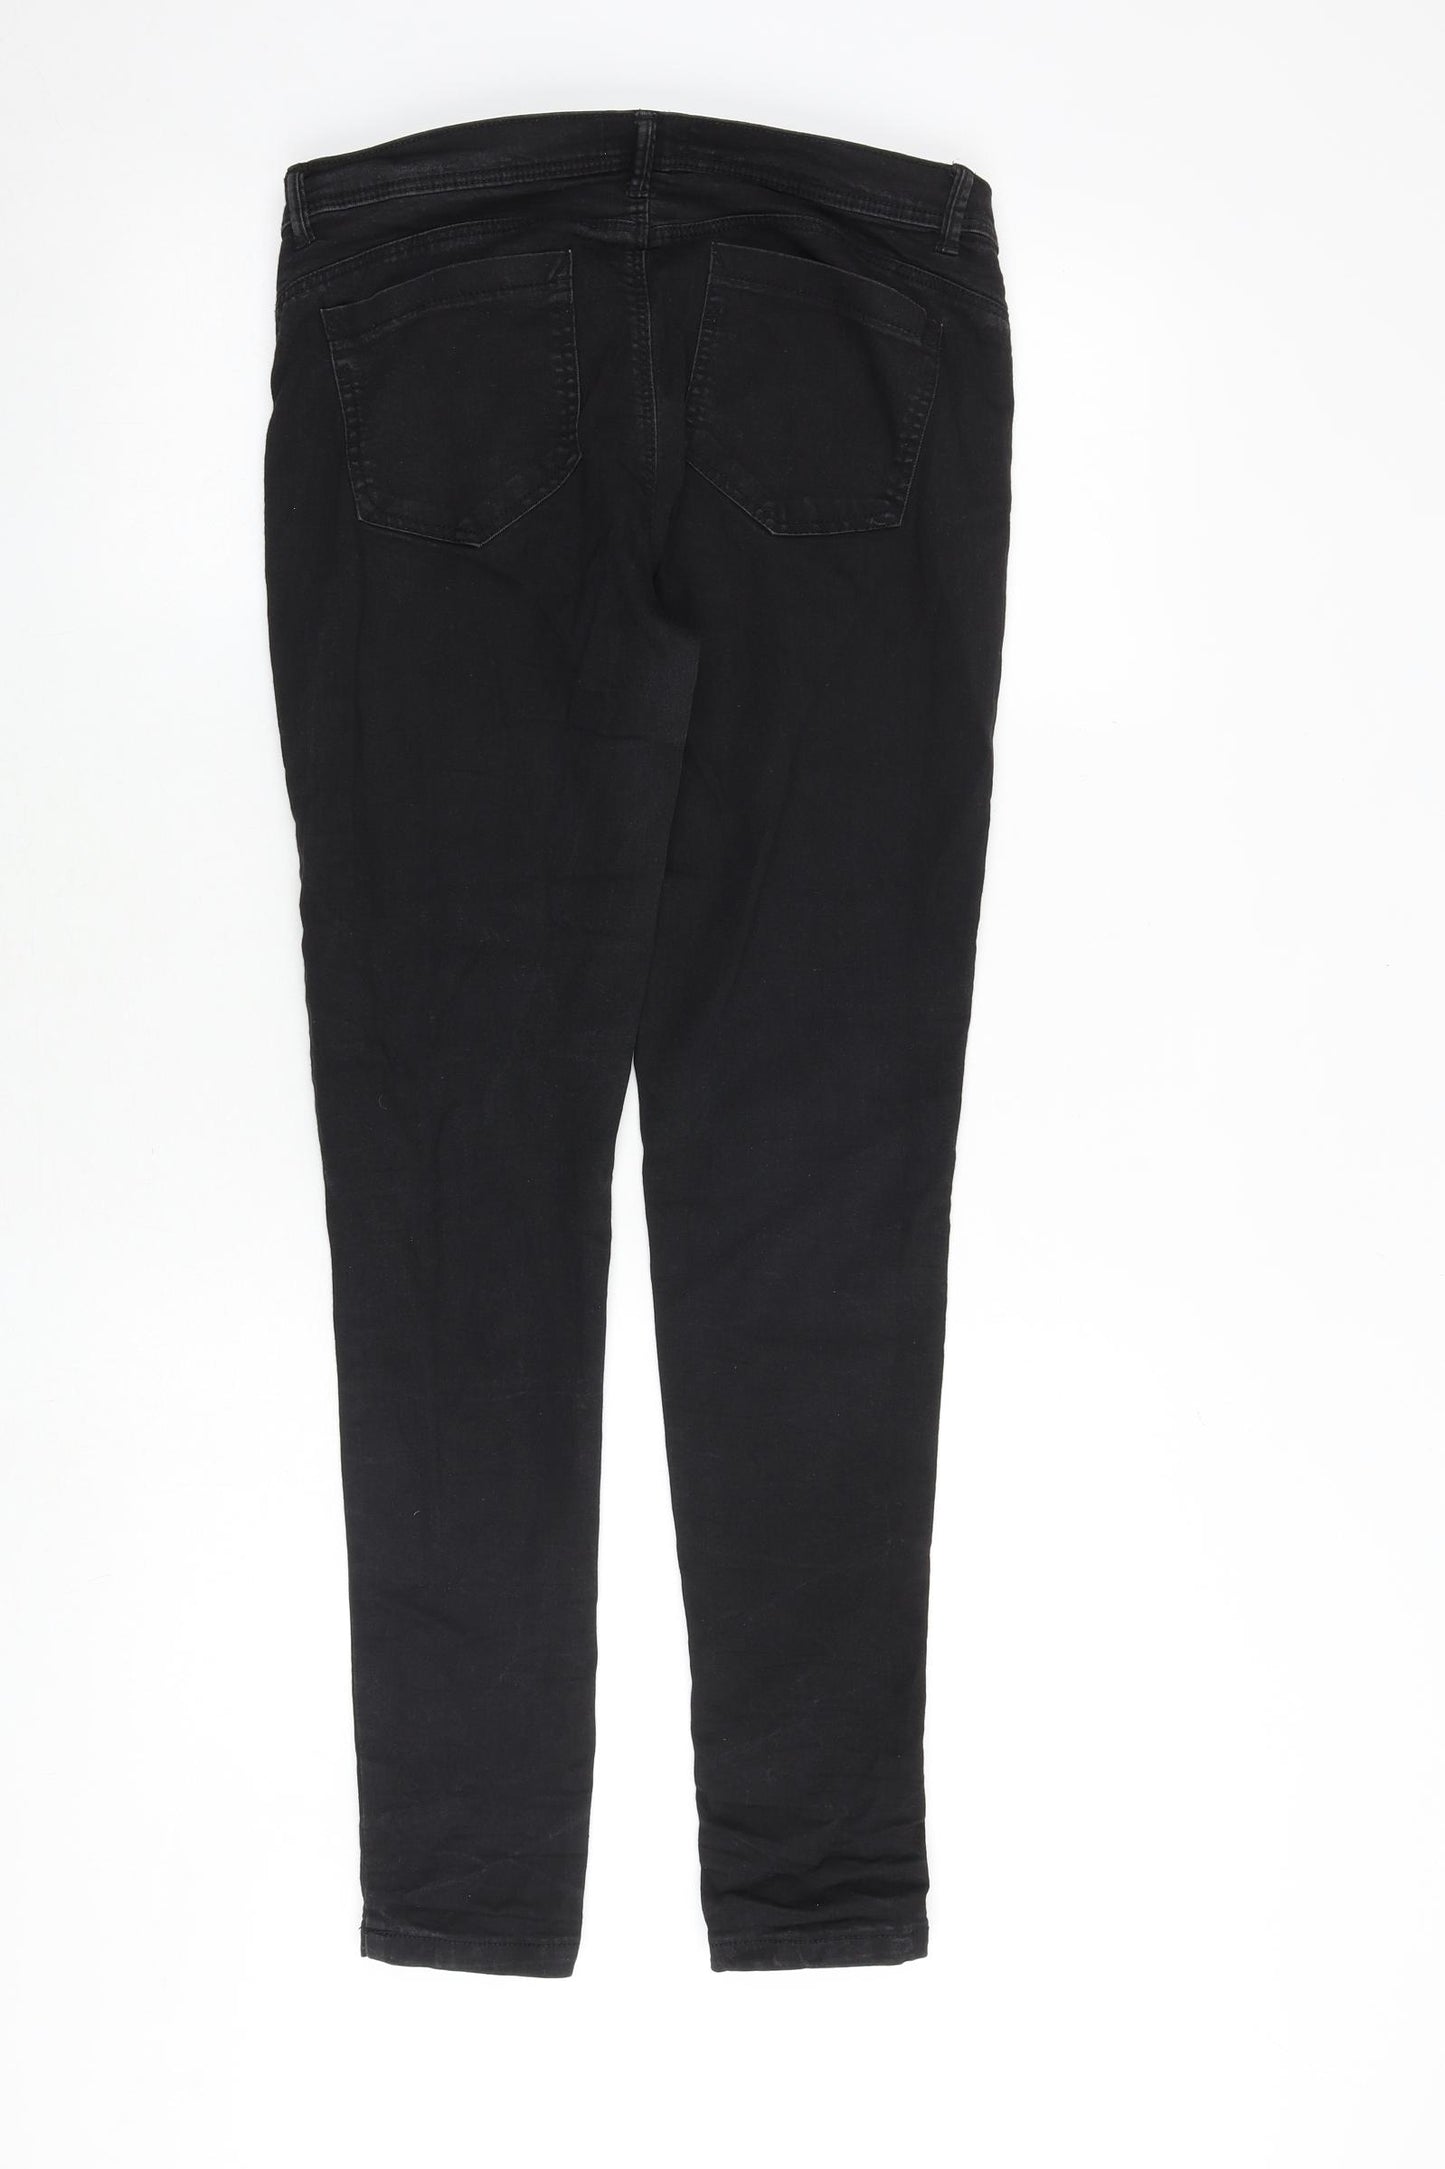 Mim Denim Collection Womens Black Cotton Skinny Jeans Size 12 Regular Zip